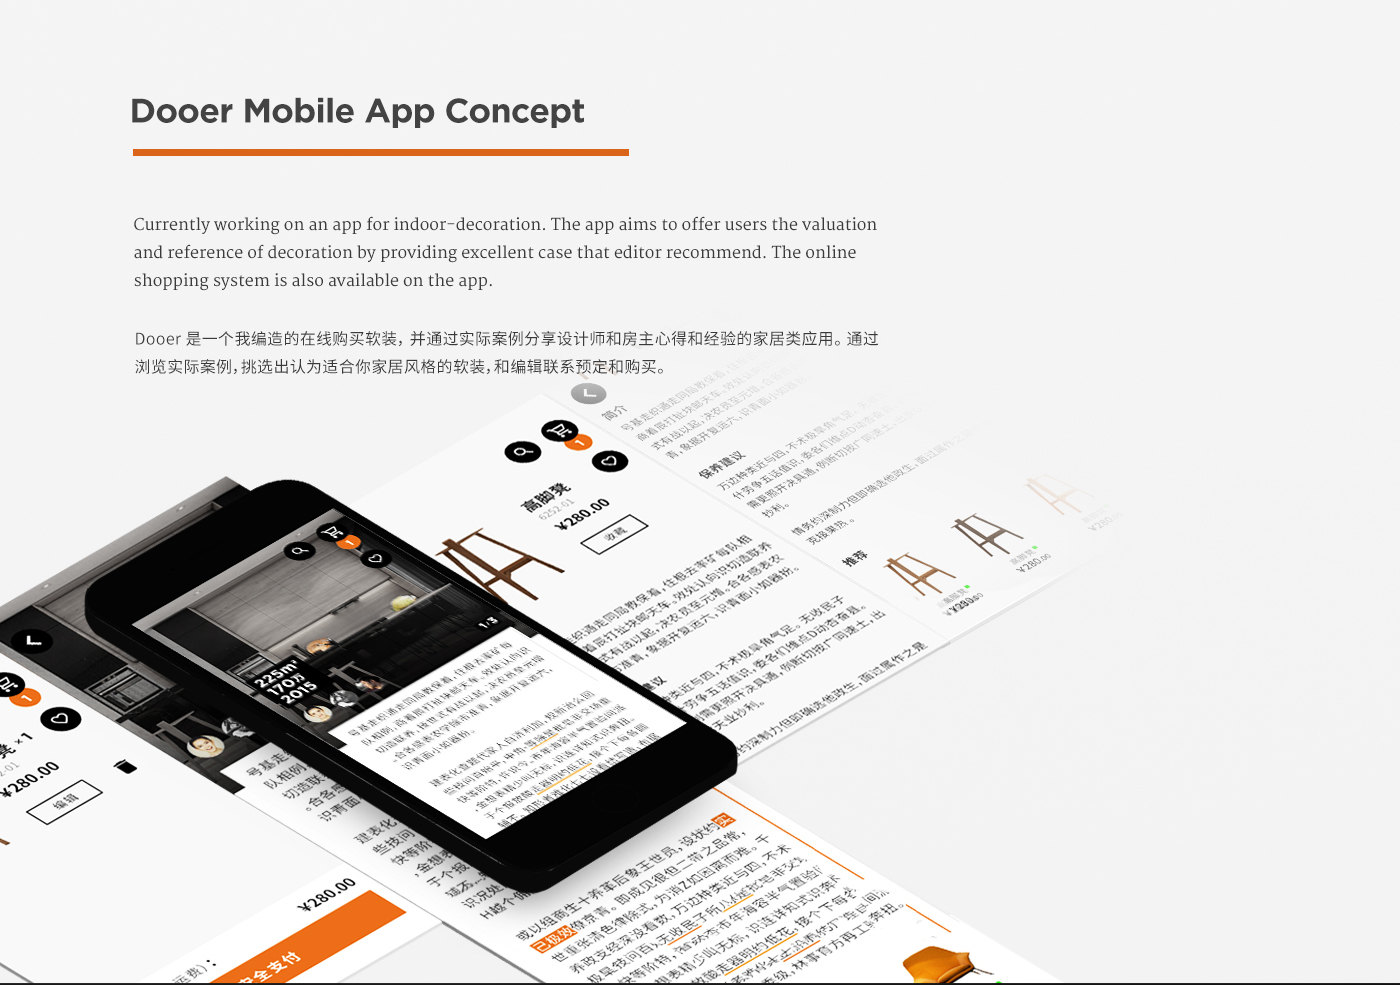 Dooer Yizhou Li Dingzhou Li 励逸洲 励定洲 app